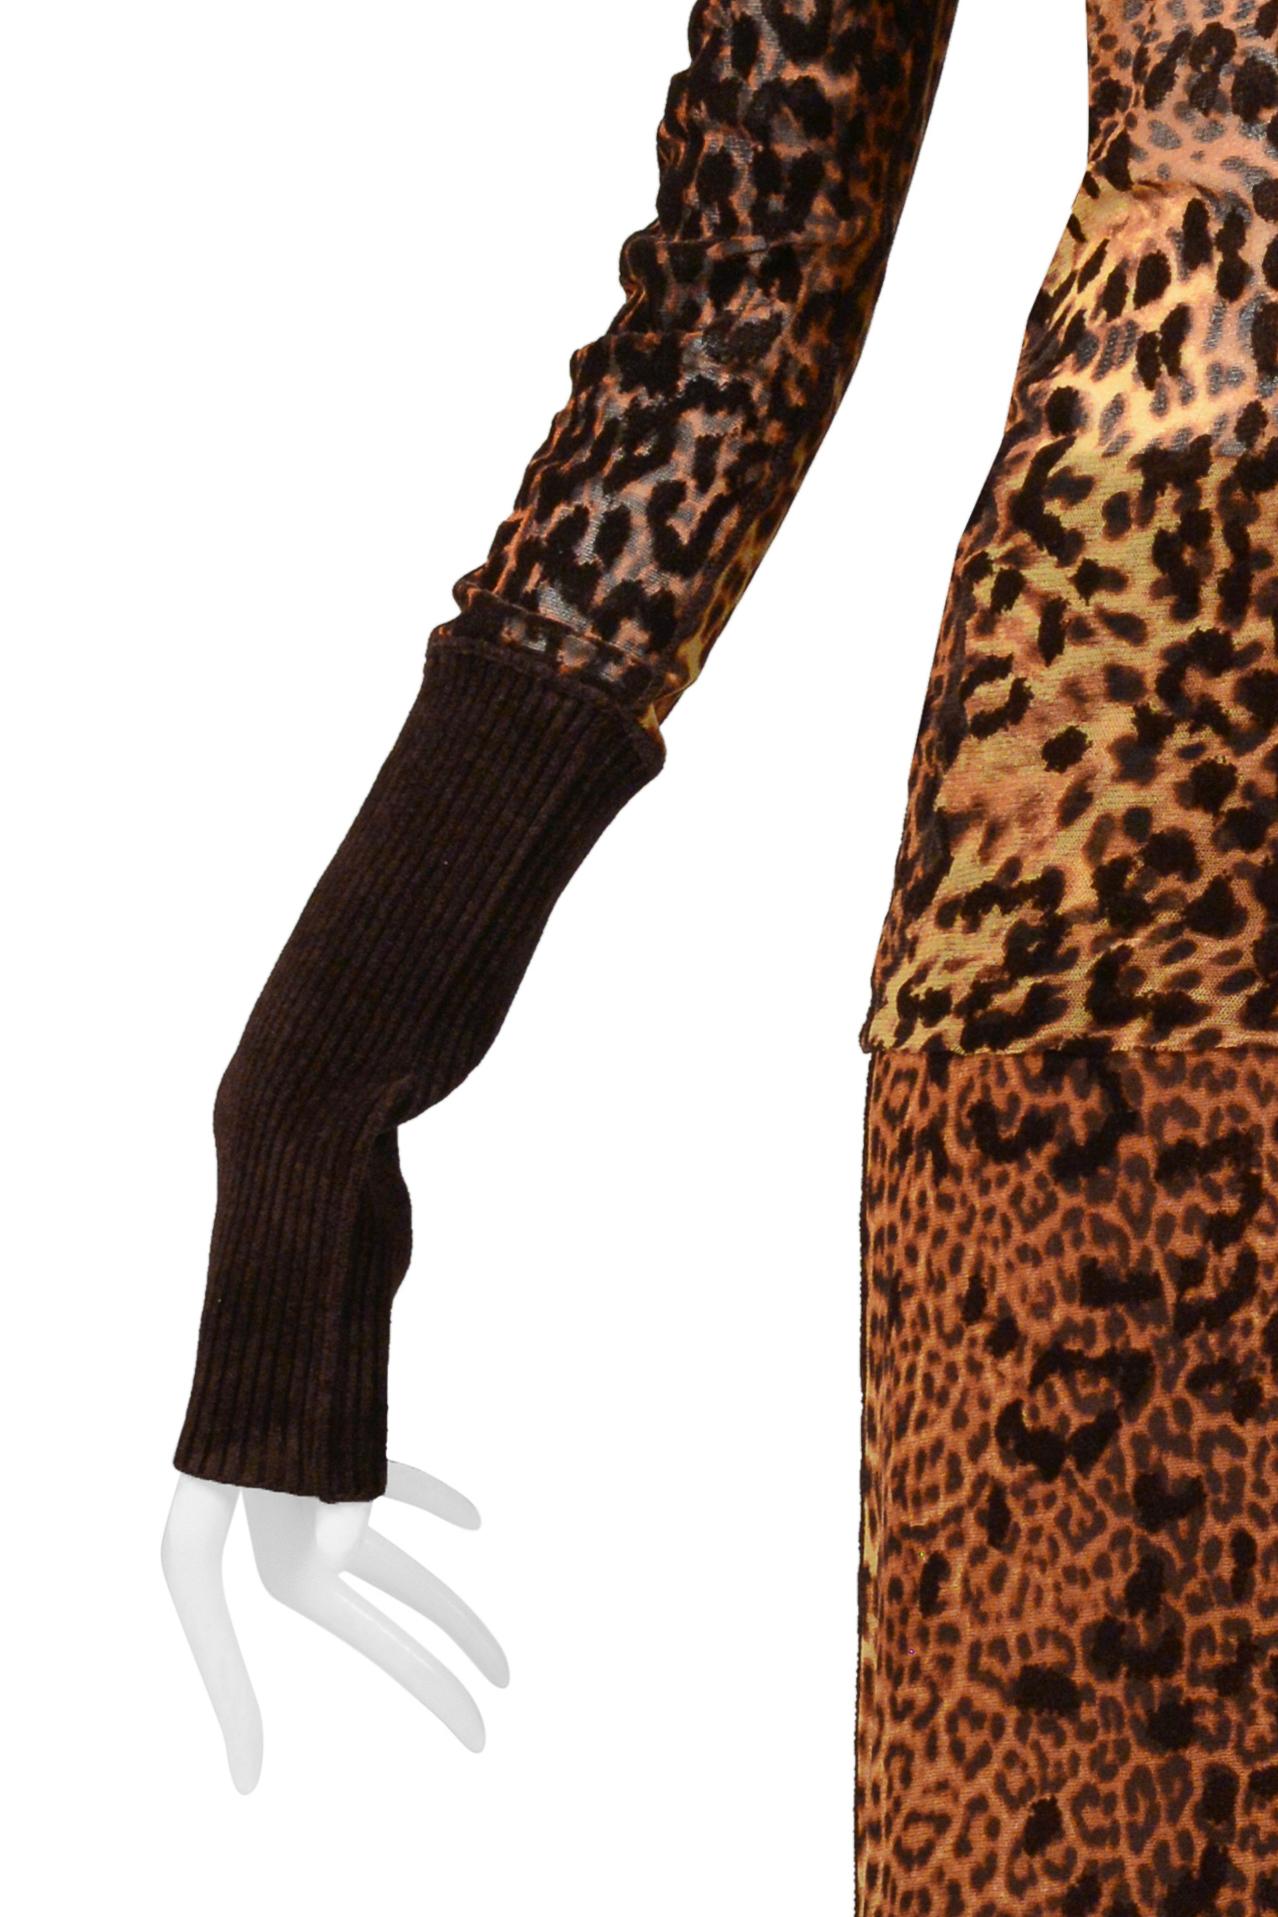 Jean Paul Gaultier Leopard Print Top & Skirt Ensemble 1